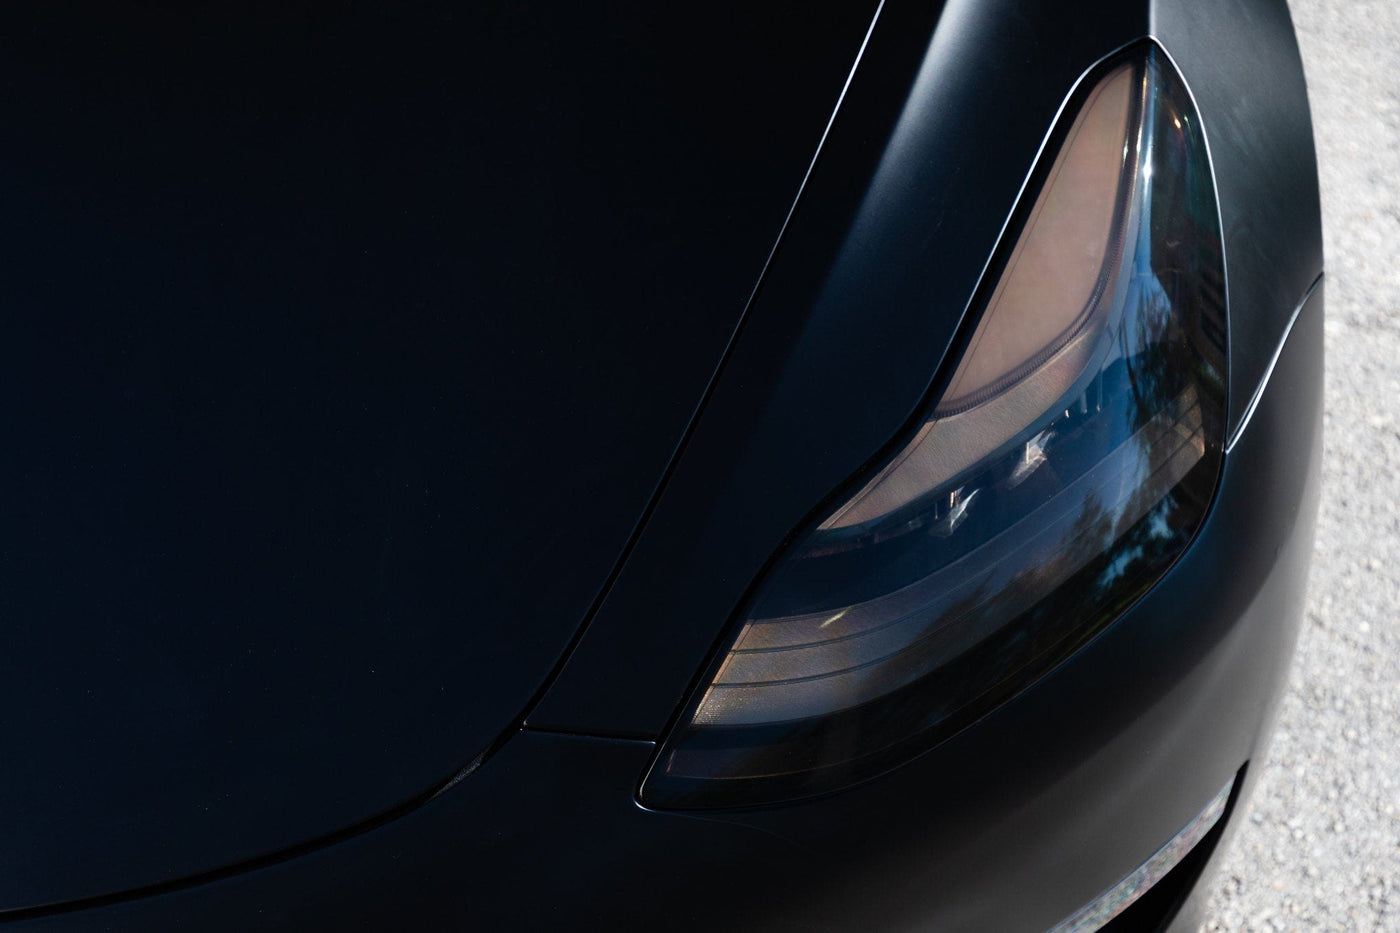 Pre-Cut Head lights, Tail lights Black & Clear Tint film set for Tesla Model 3 2017-2022 - PimpMyEV